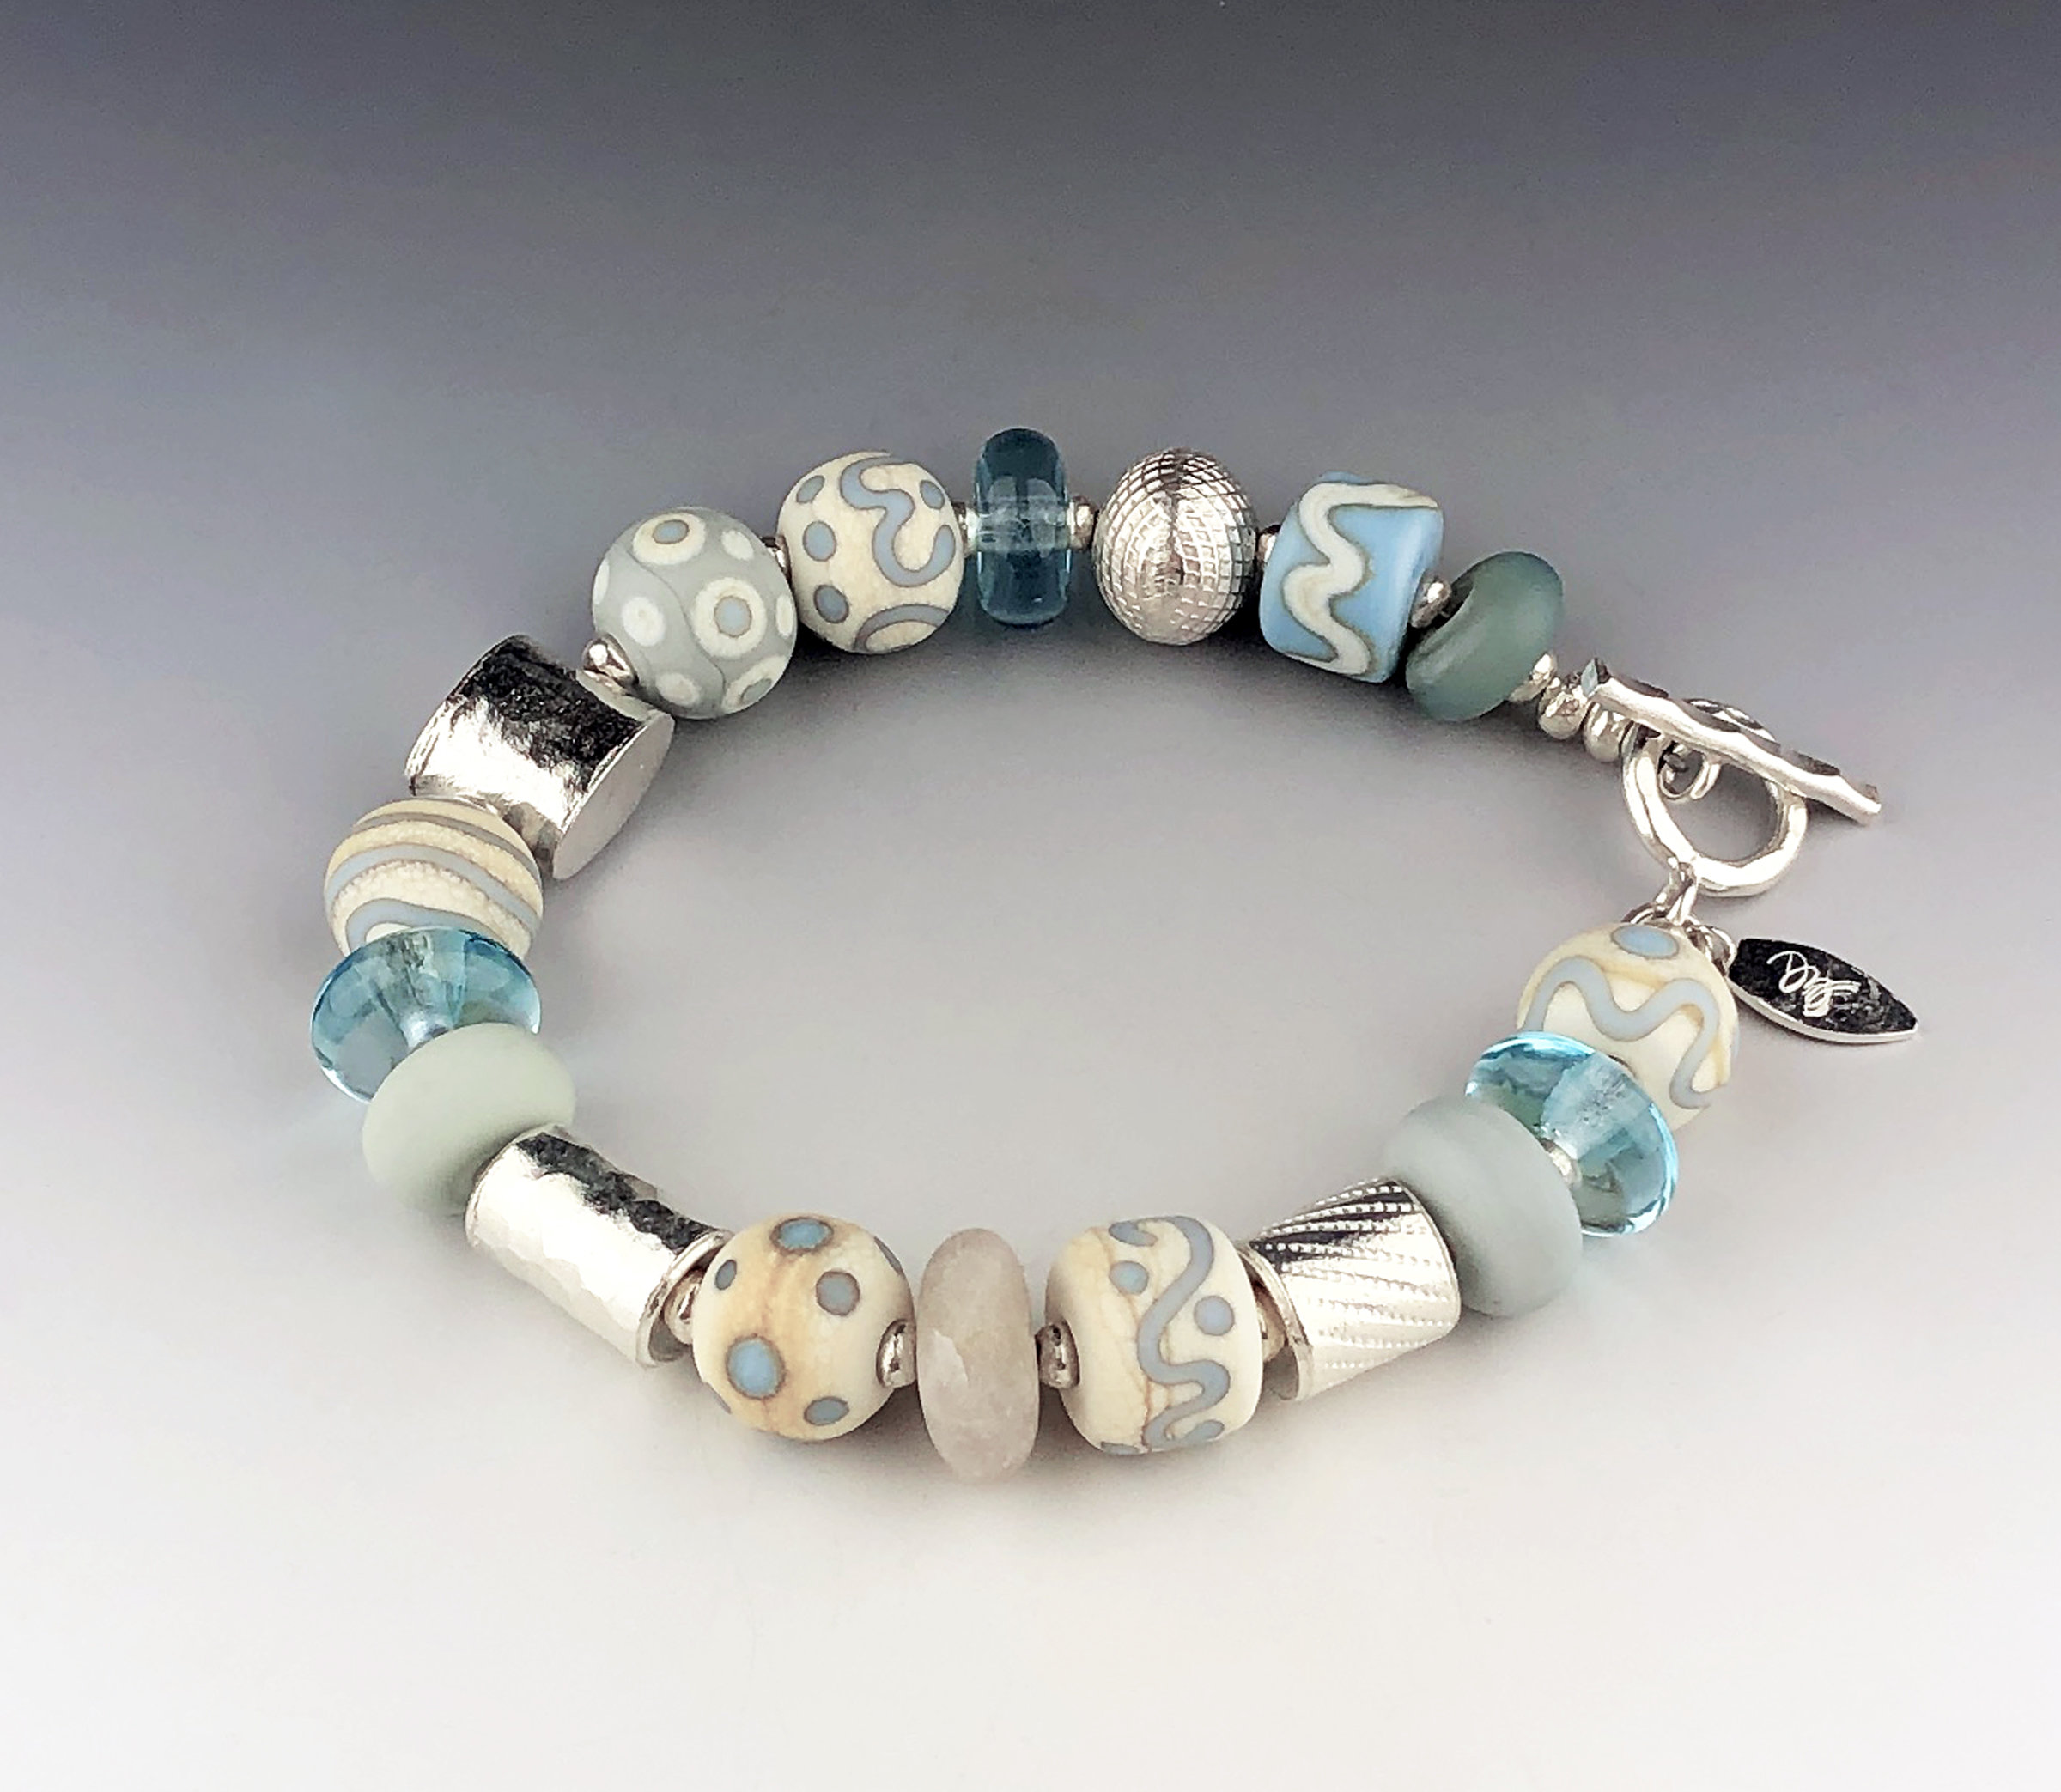 Northeast Engaged Array of Petite Aqua & Ivory Bracelet by Dianne Zack (Beaded Bracelet) | Artful Home